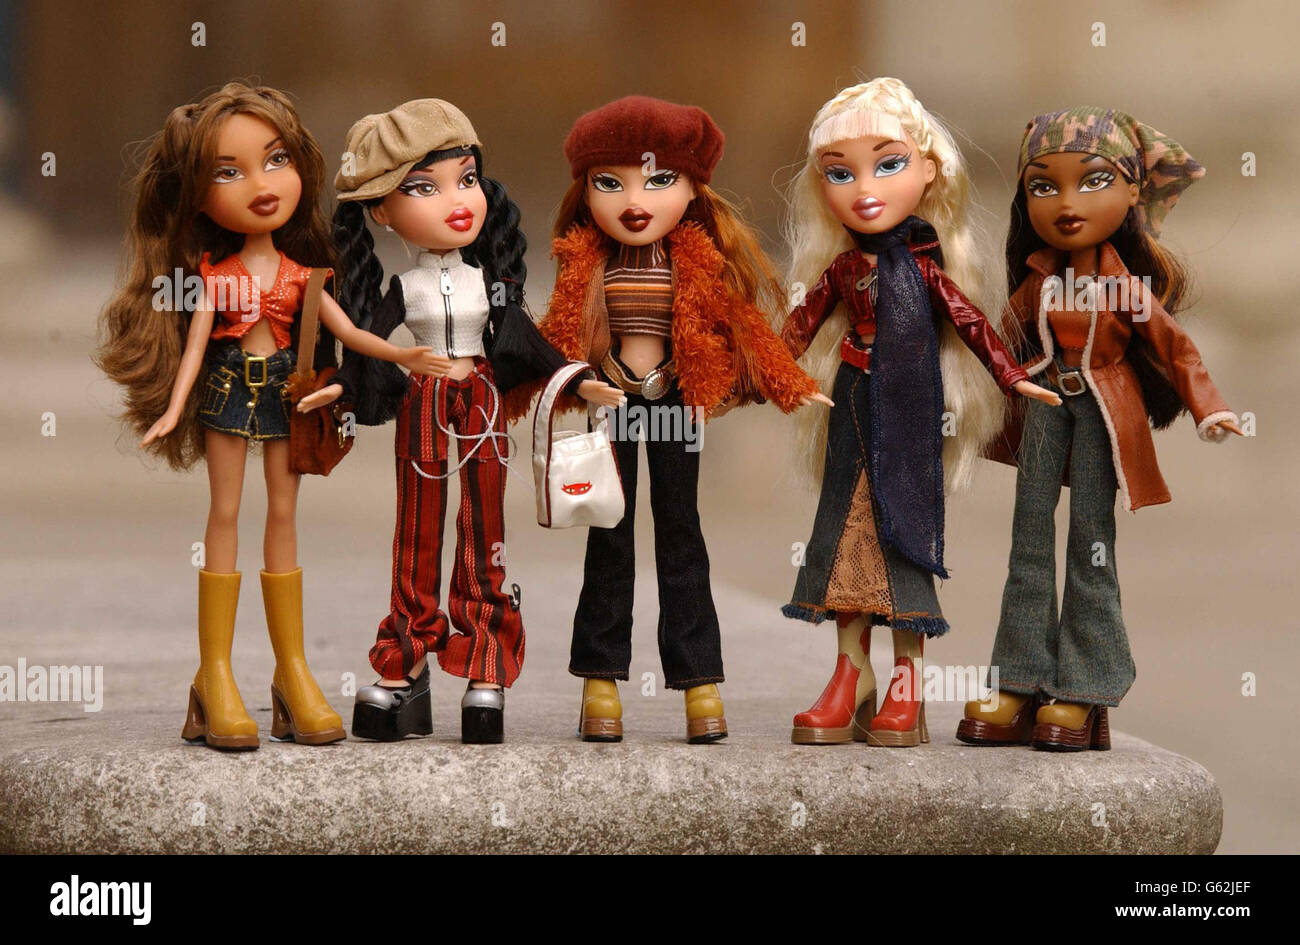 Dream Toys 2002 - The Bratz Dolls Stock Photo